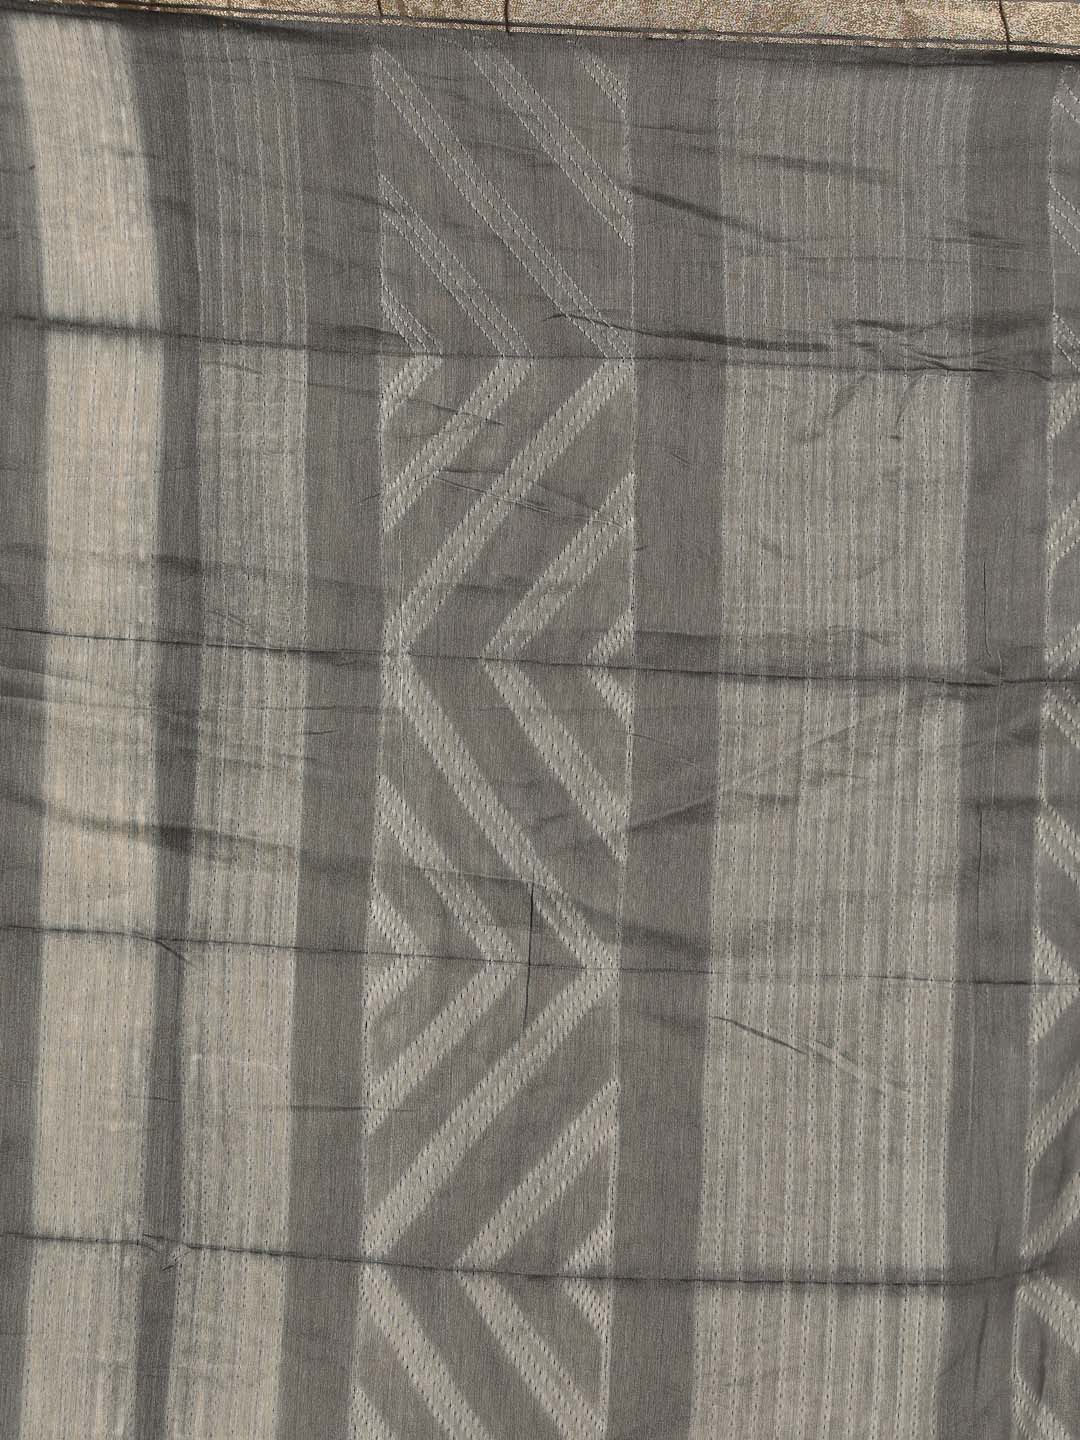 Indethnic Shibori Silk Cotton Saree in Orange - Saree Detail View